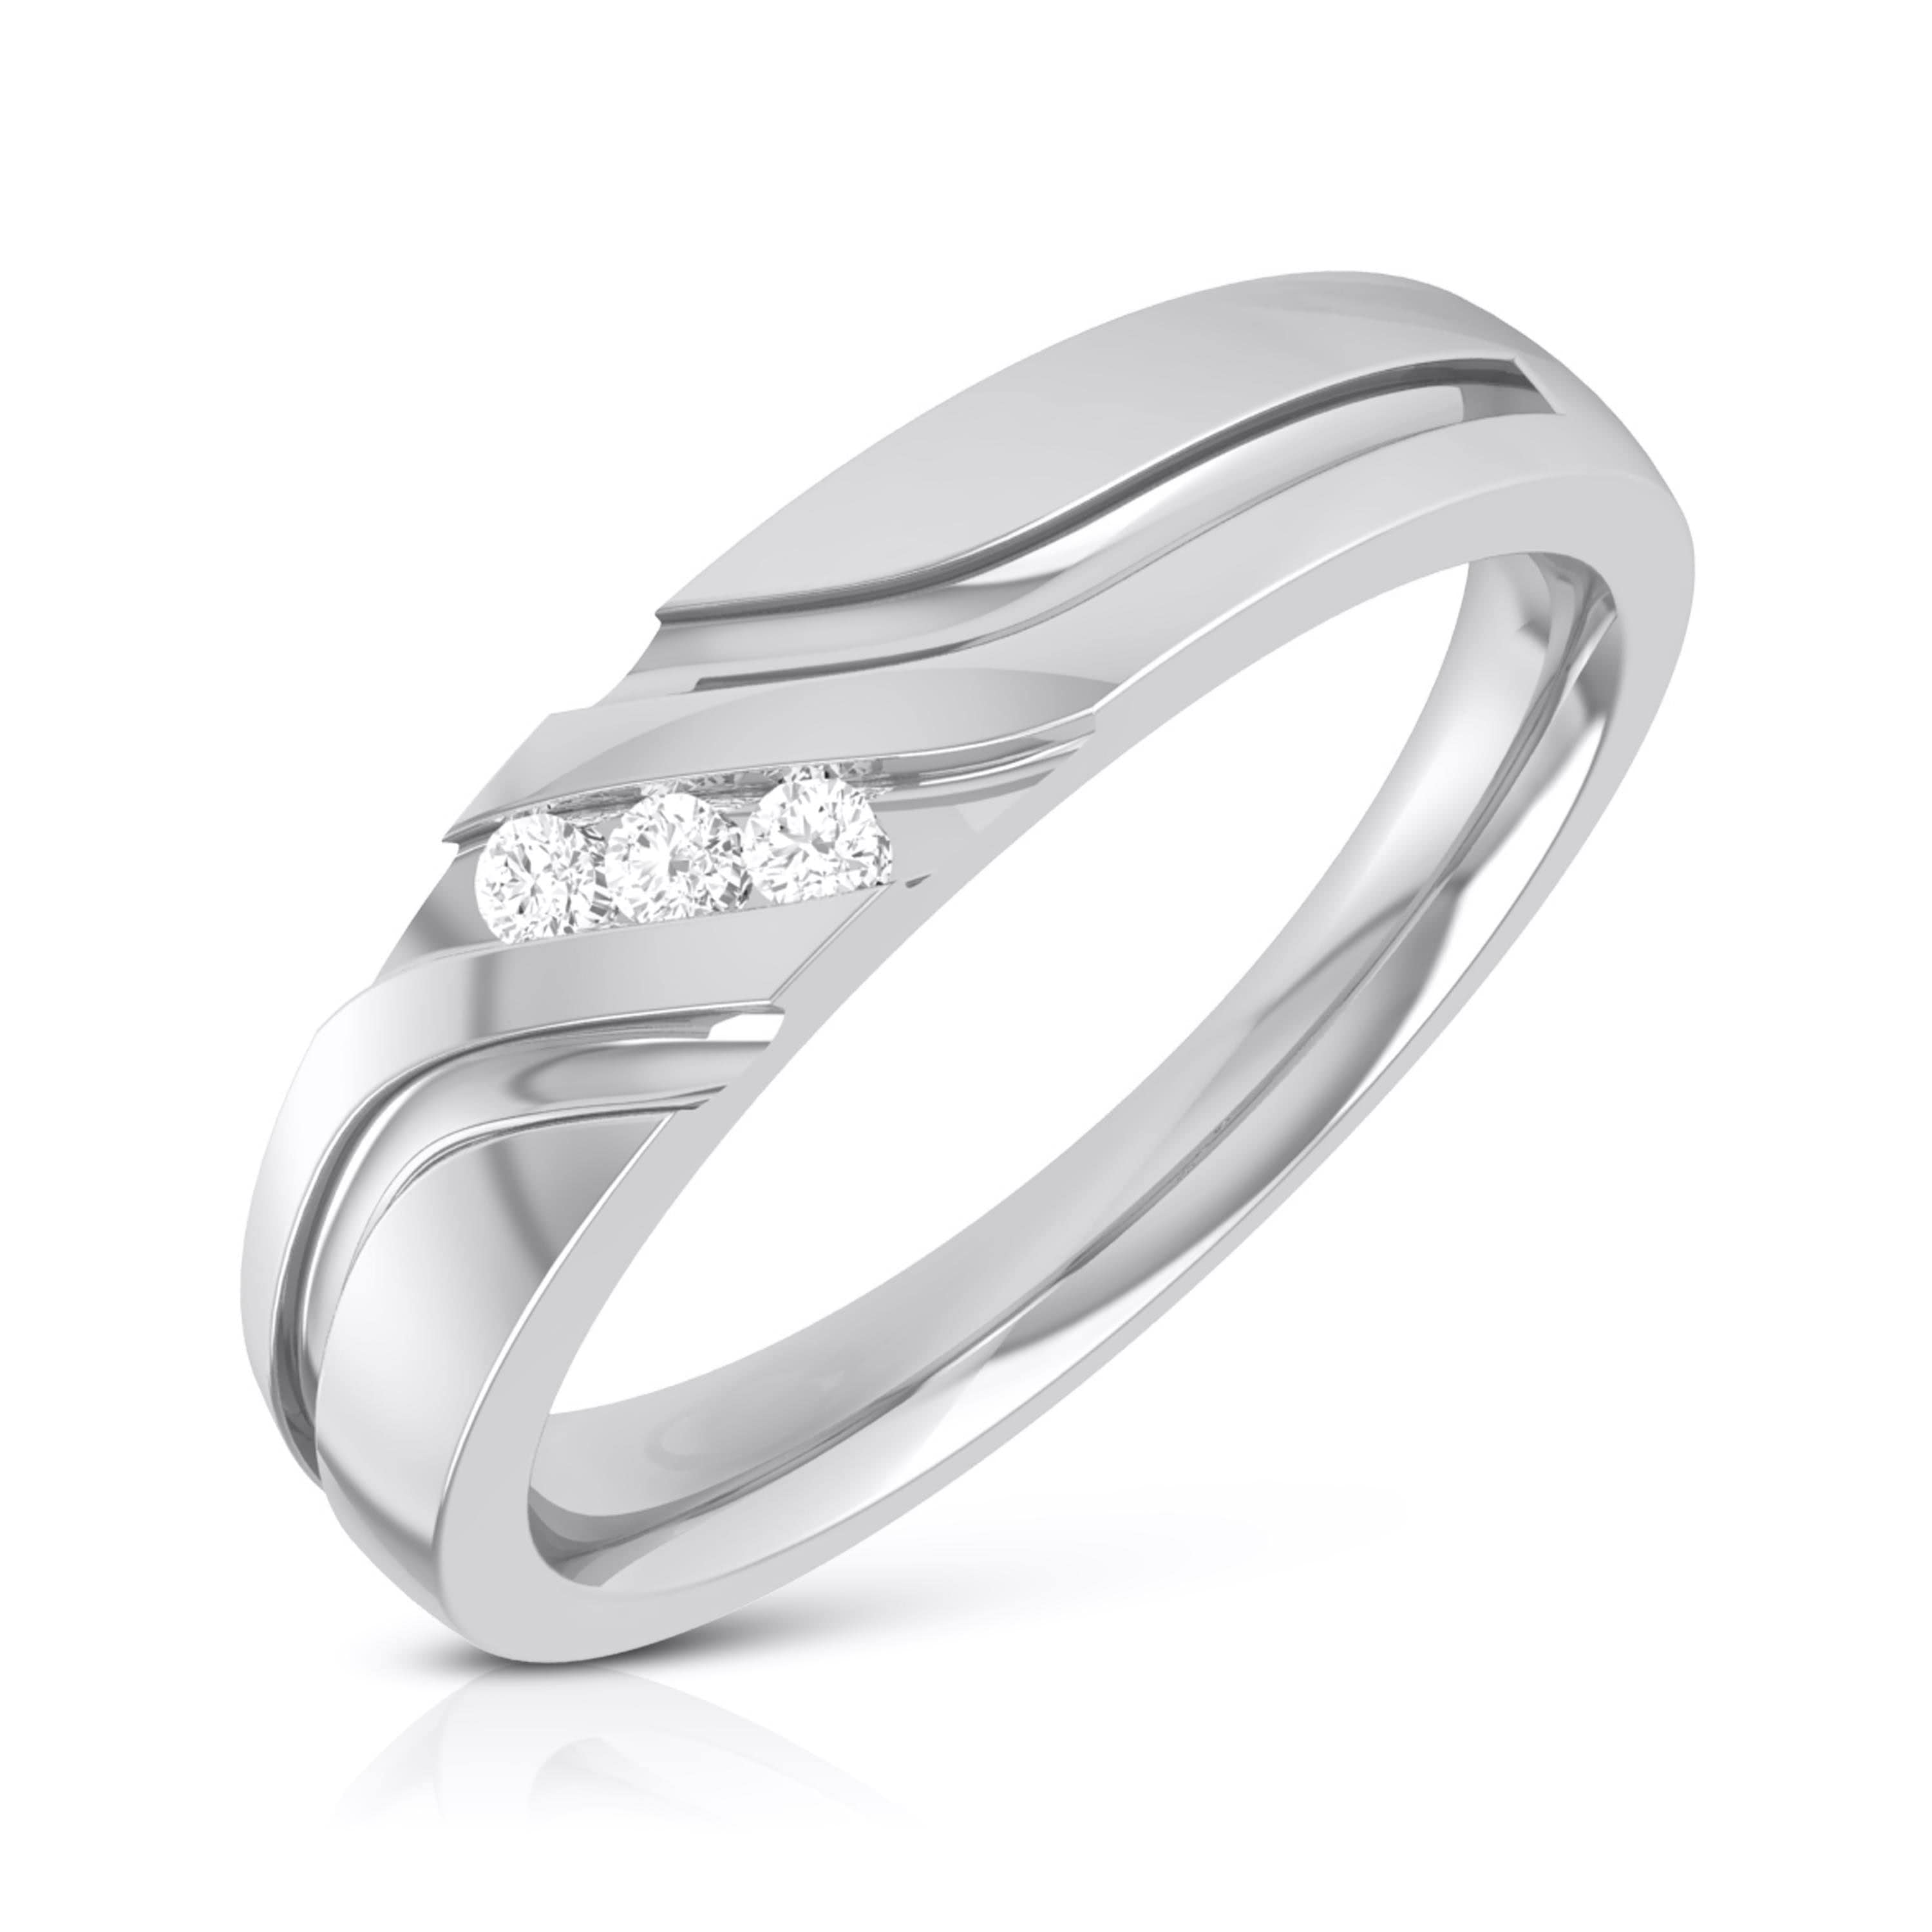 Buy Ready To Ship Sublime Diamond Ring for Girlfriend – Fiona Diamonds